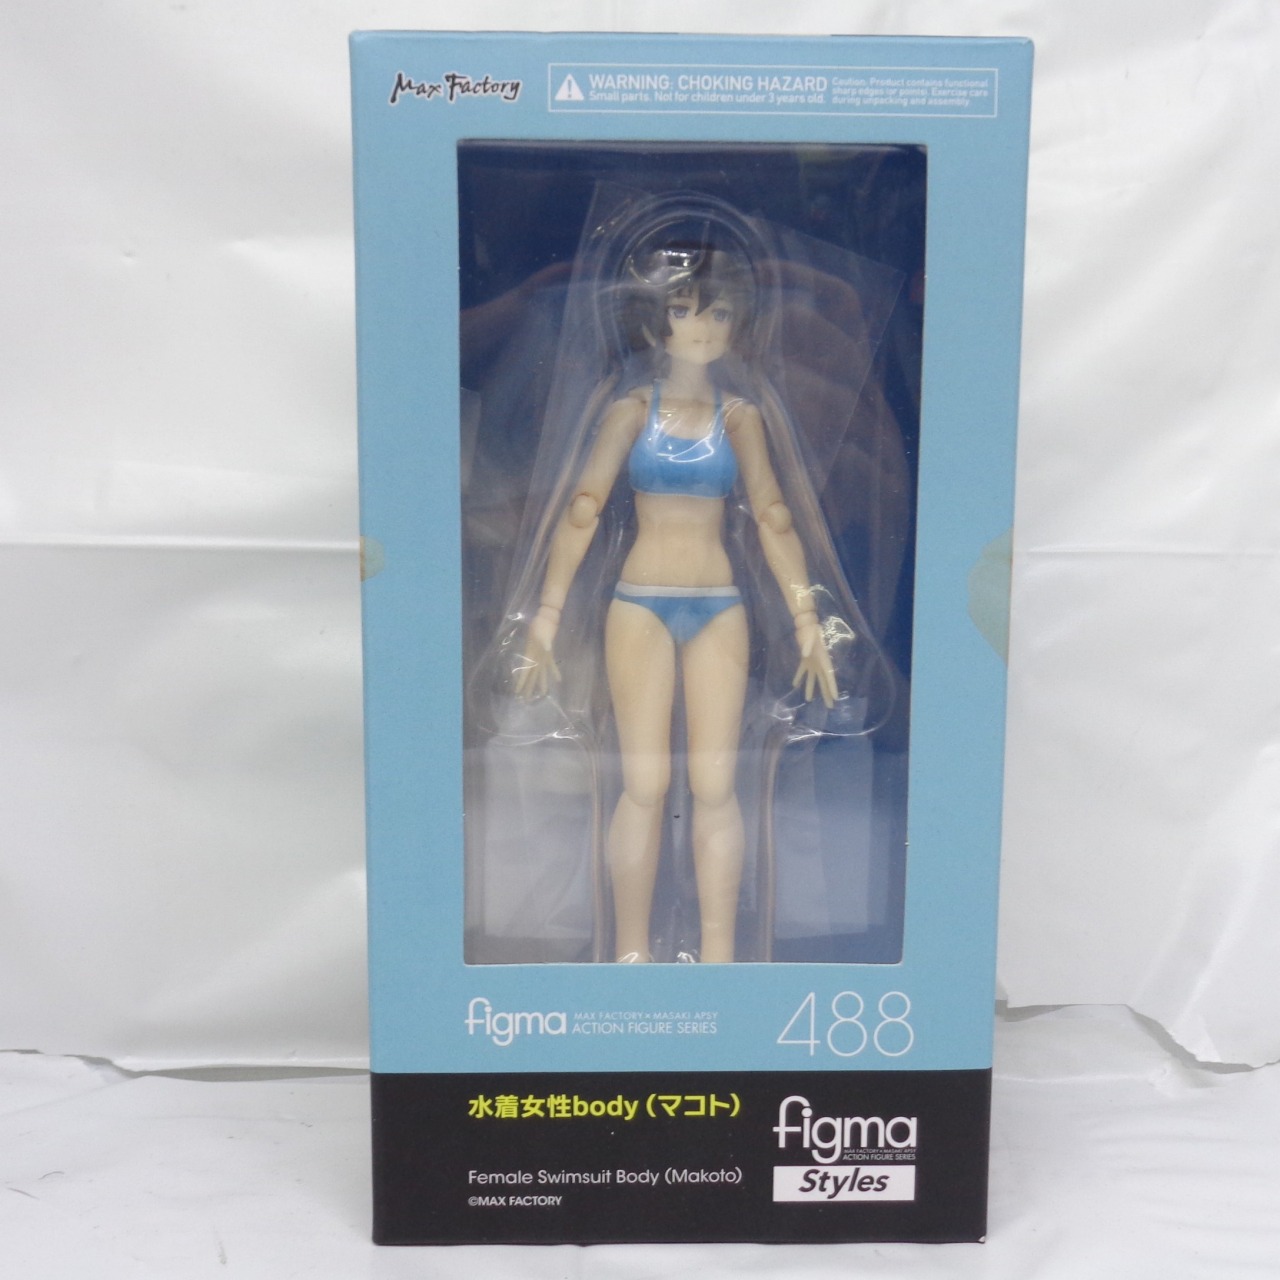 Figma 488 Female Swimsuit Body (Makoto)